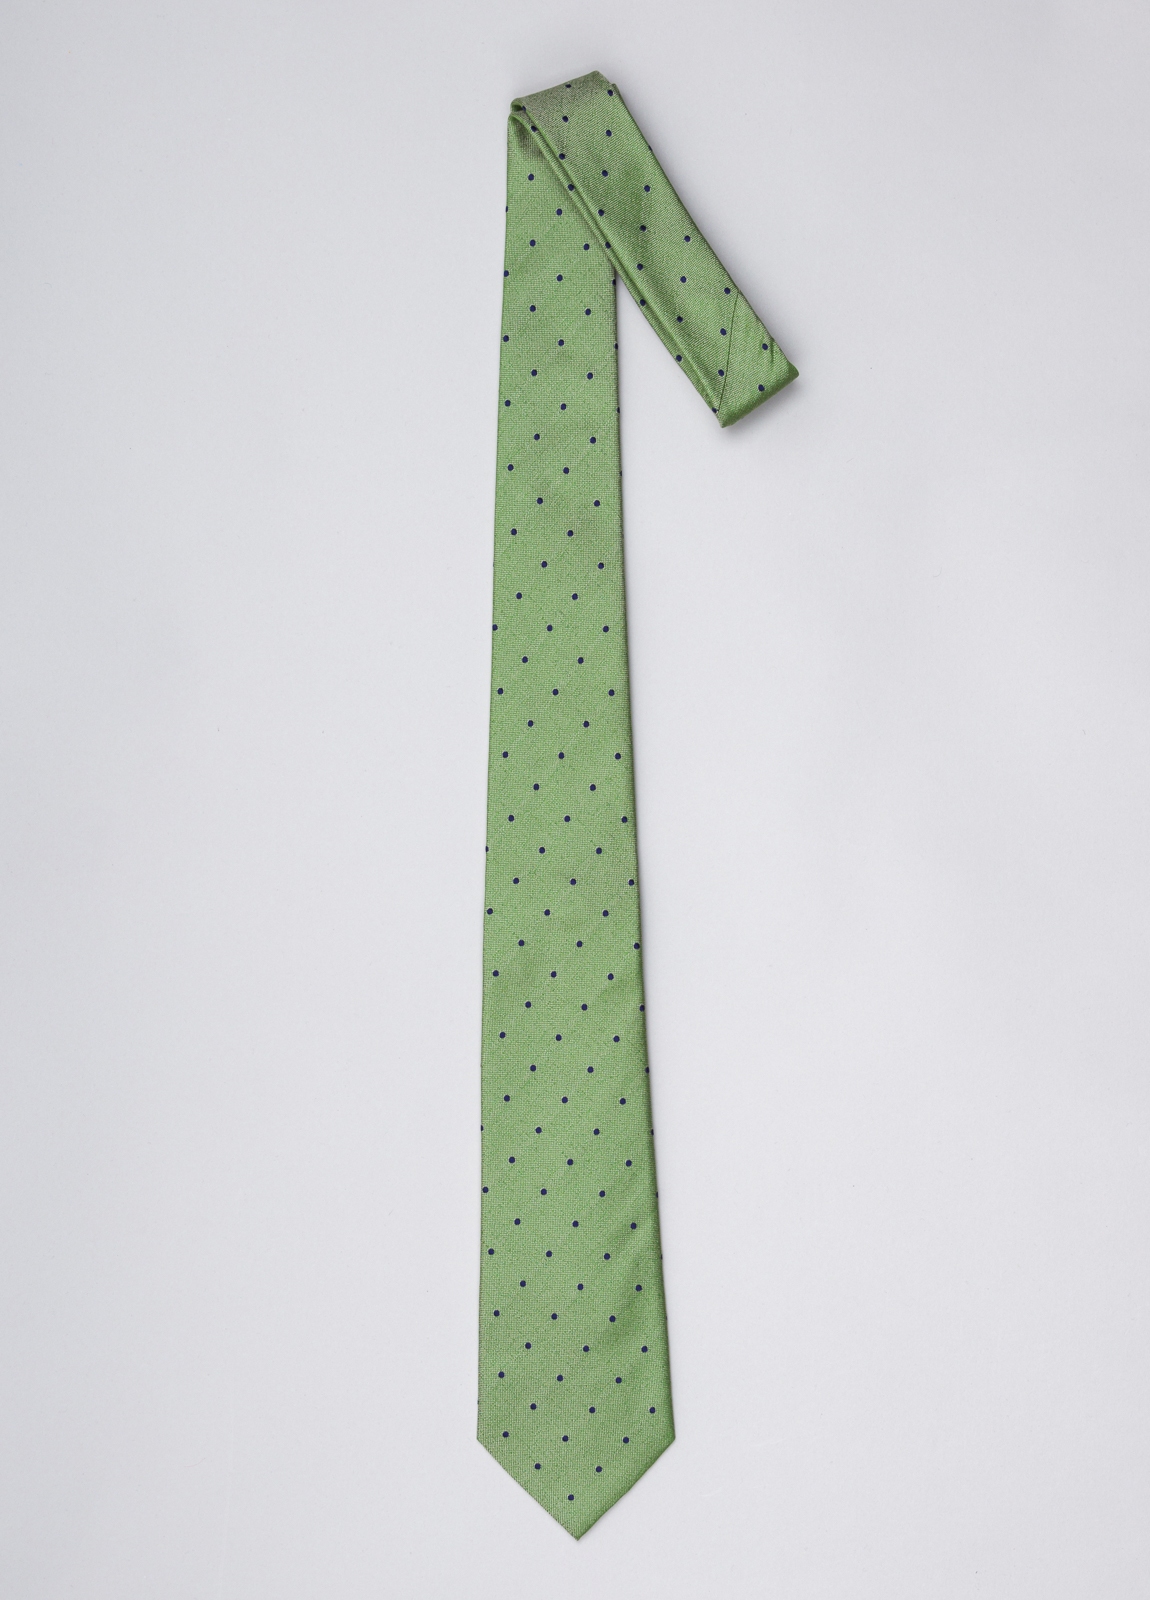 Corbata FUREST COLECCIÓN color verde con topito azul - Ítem1